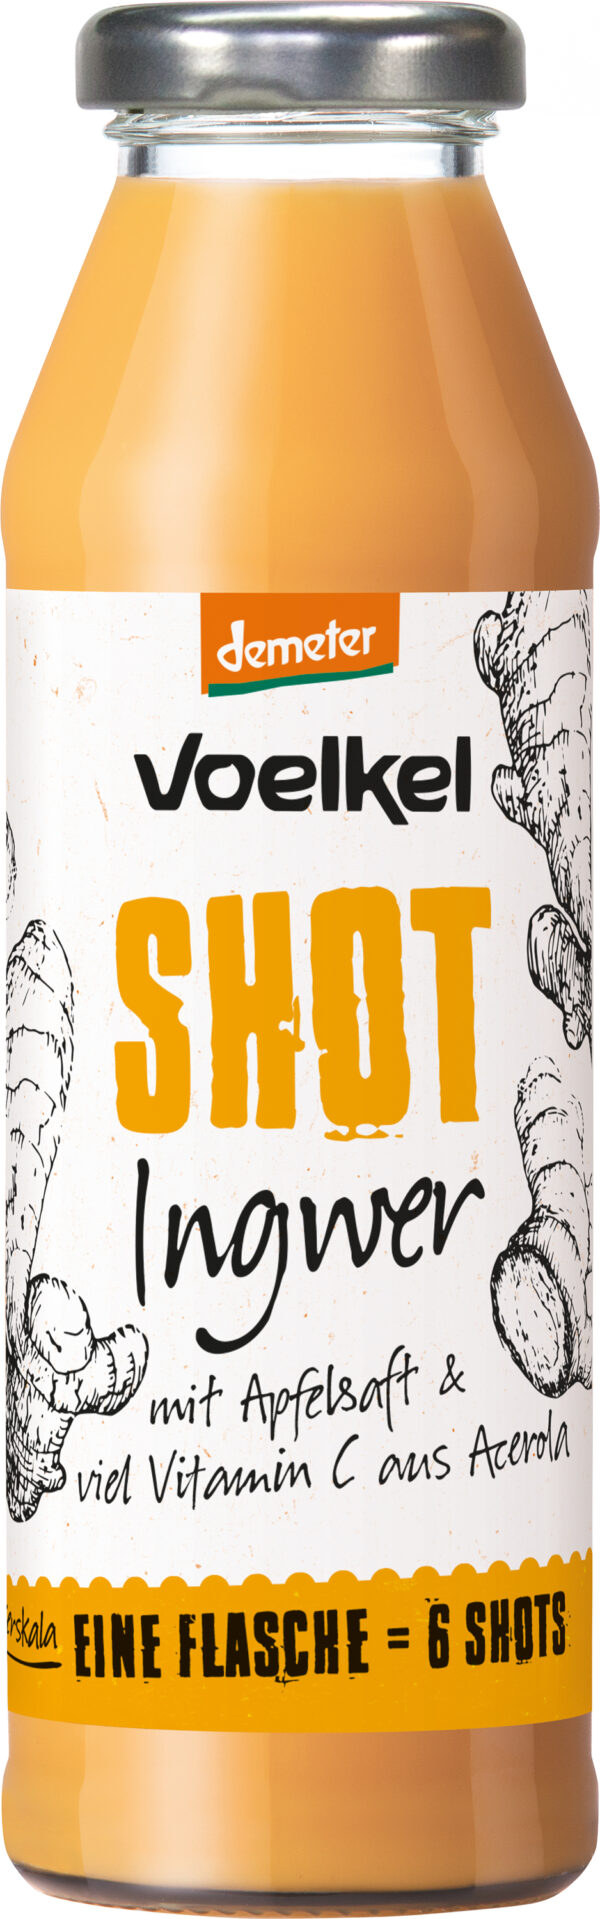 Voelkel Shot Ingwer 6 x 0,28l